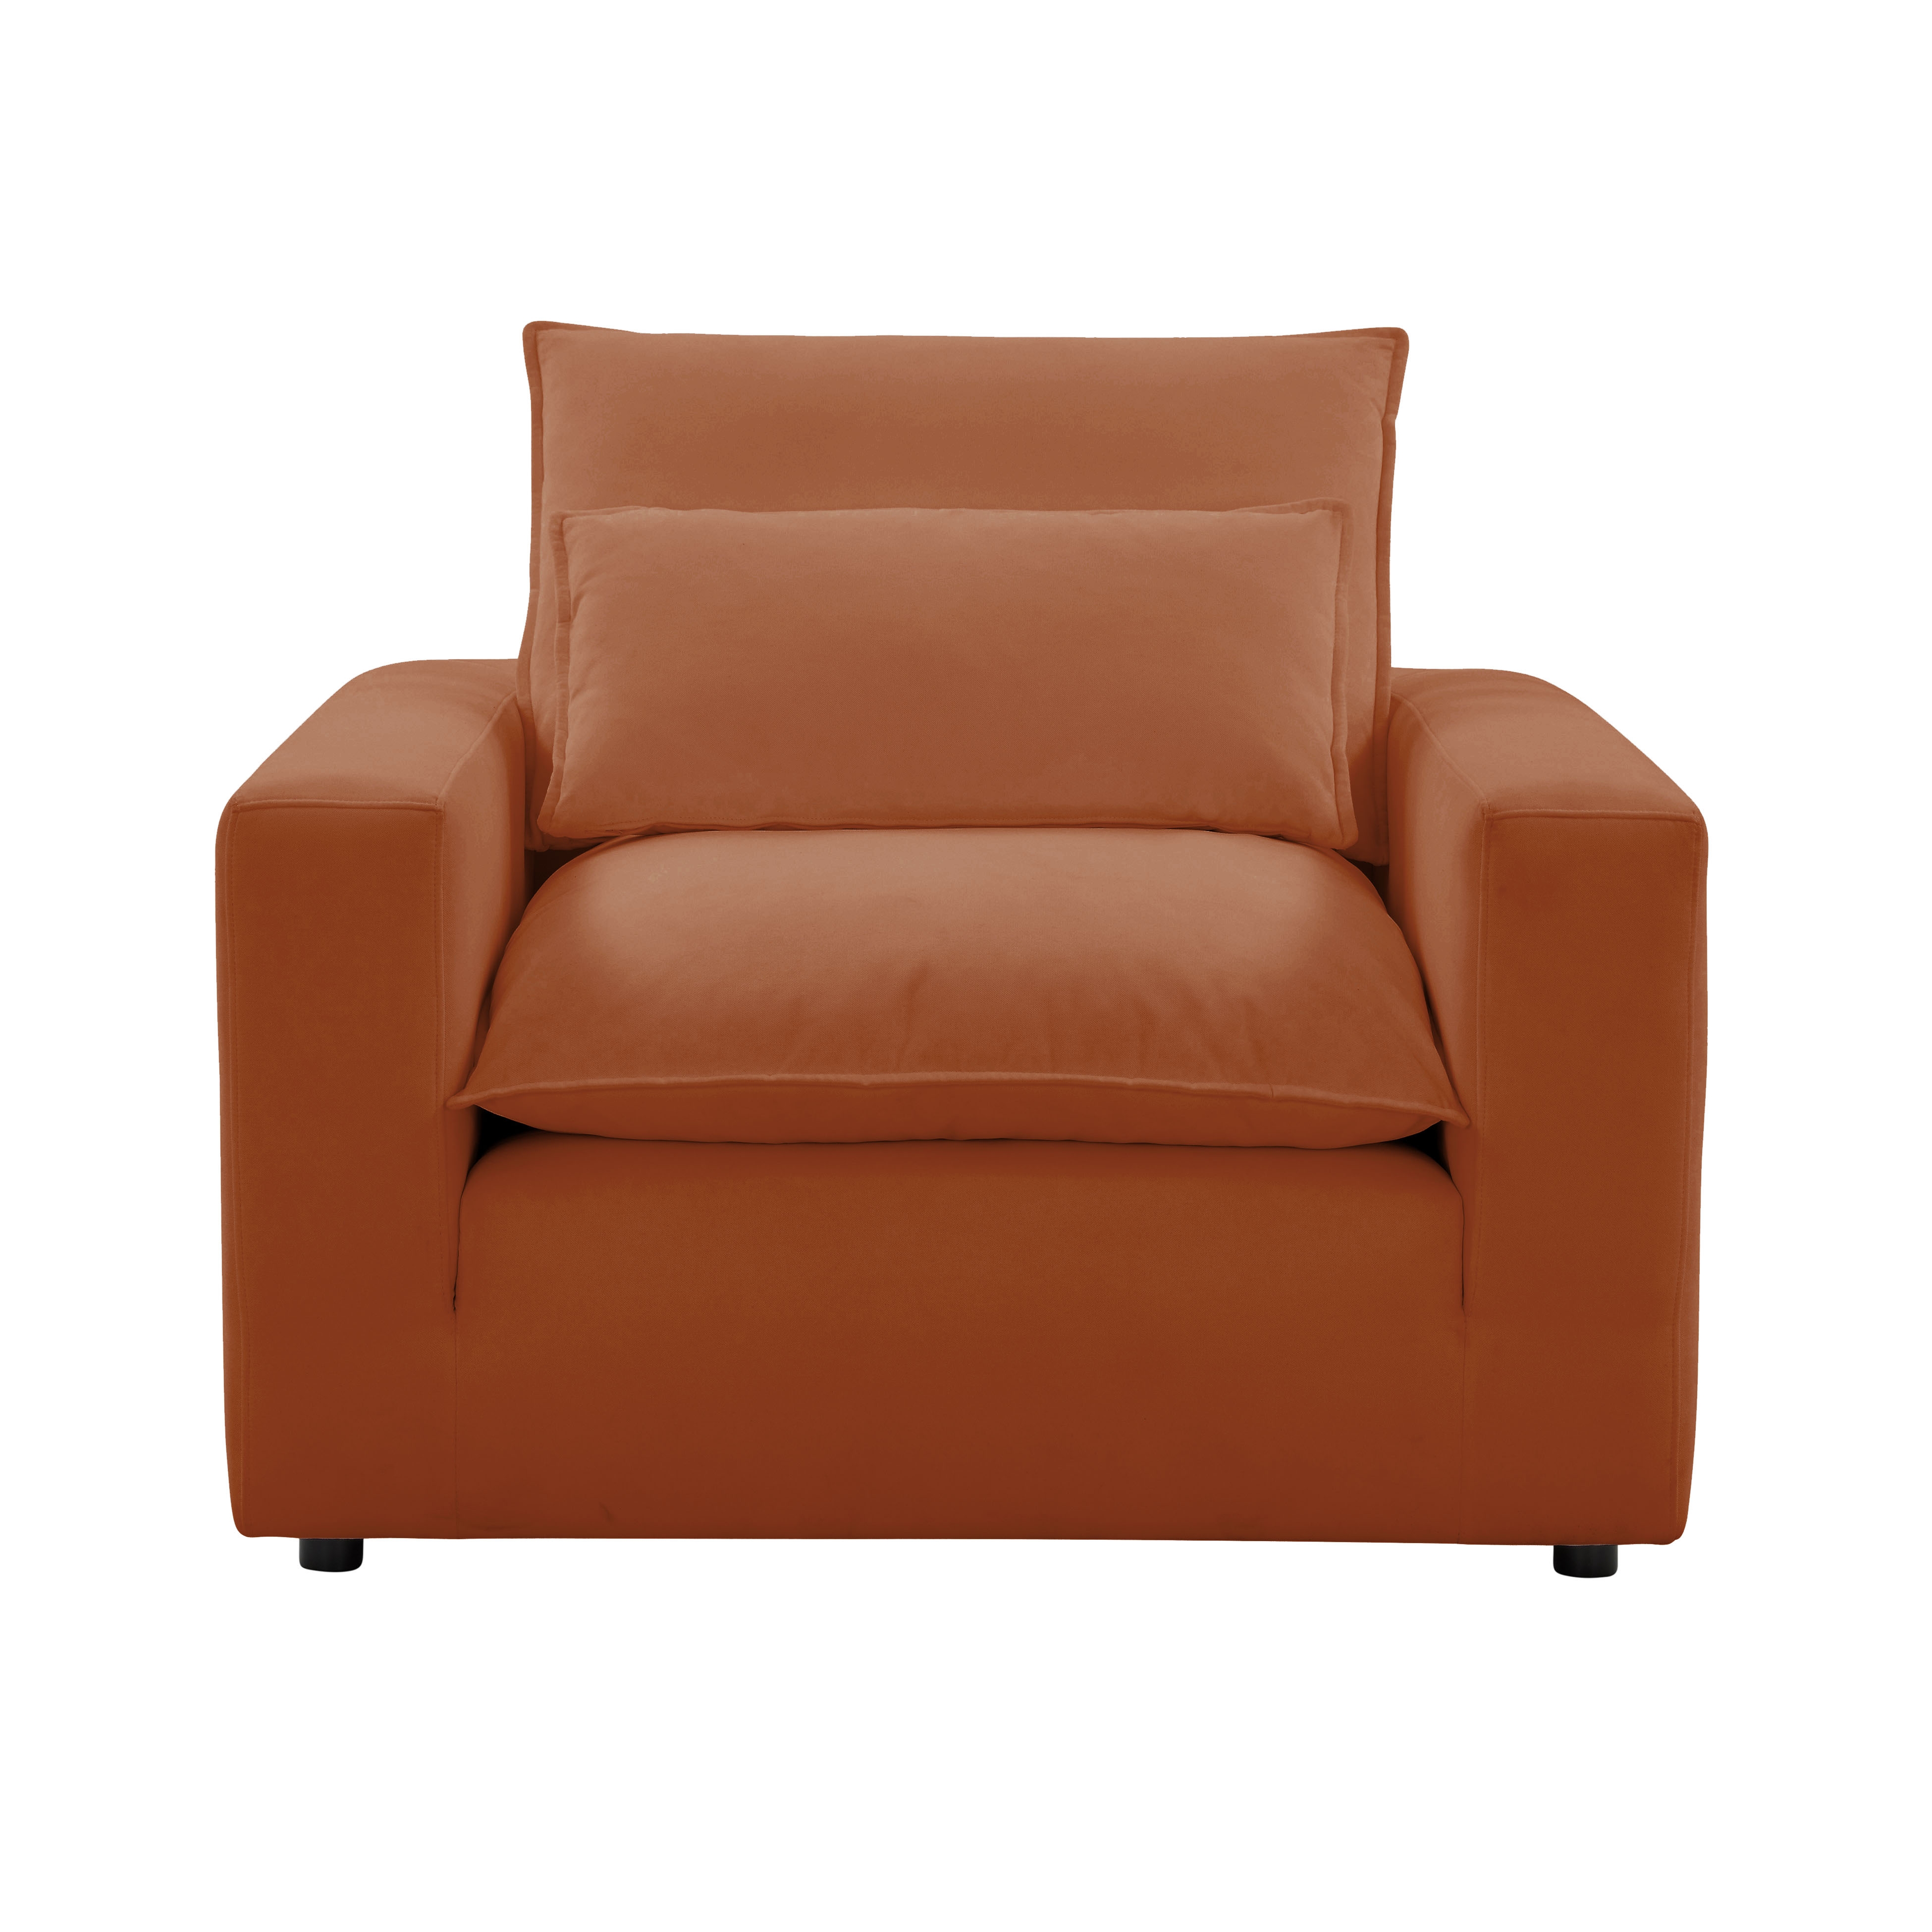 Cali Rust Arm Chair - Image 2